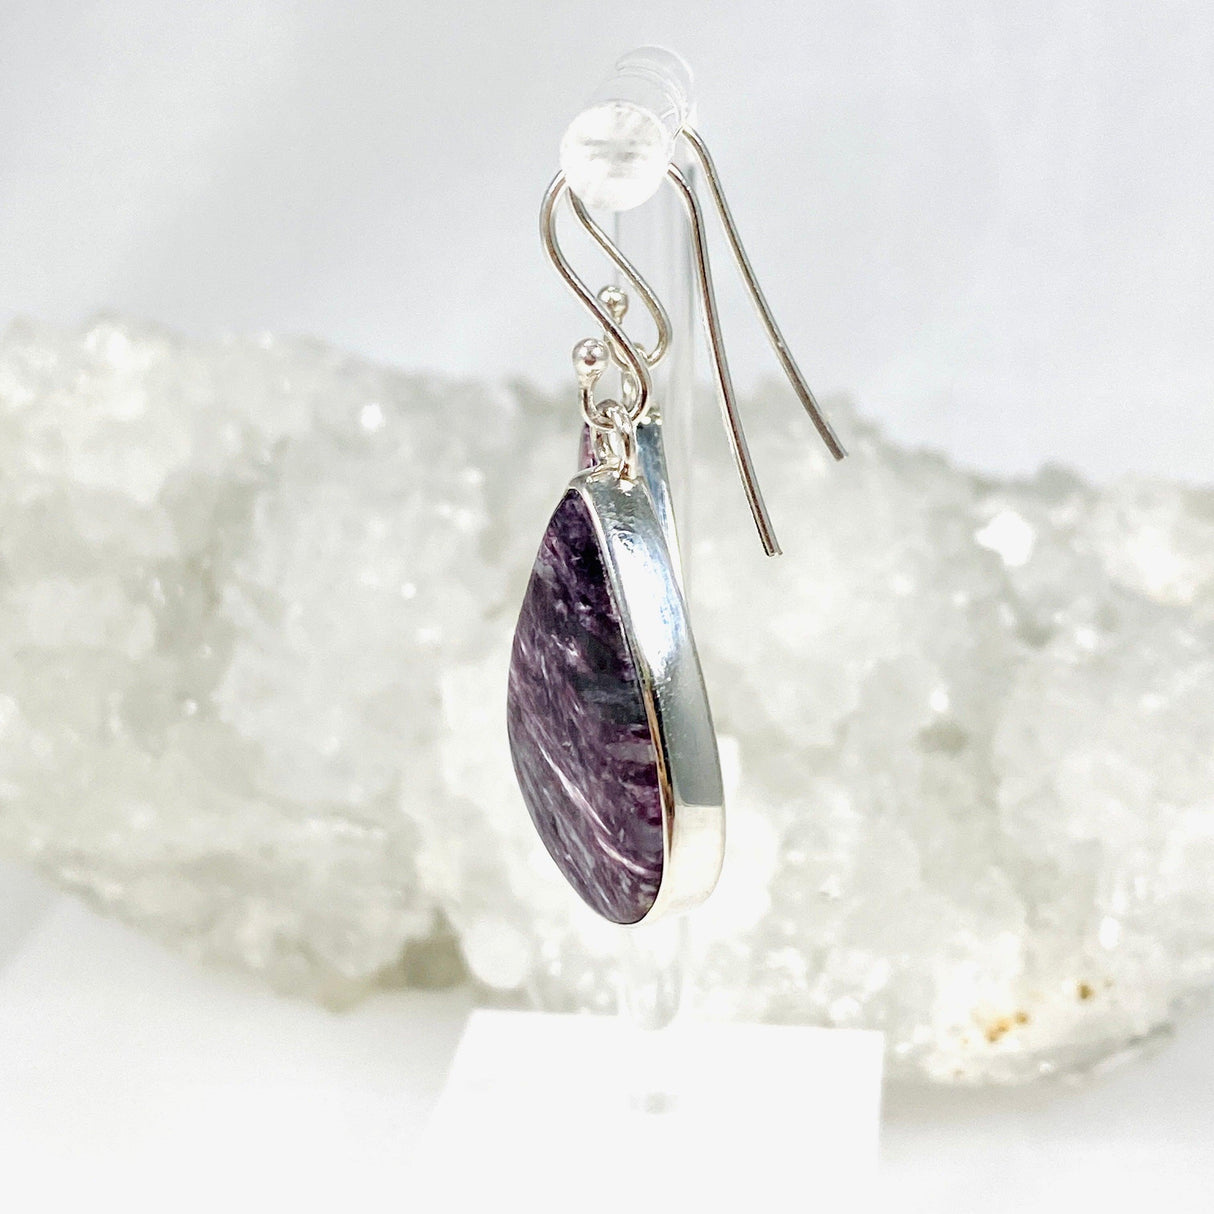 Purple Charoite tear drop earrings in sterling silver hanging on an earring stand